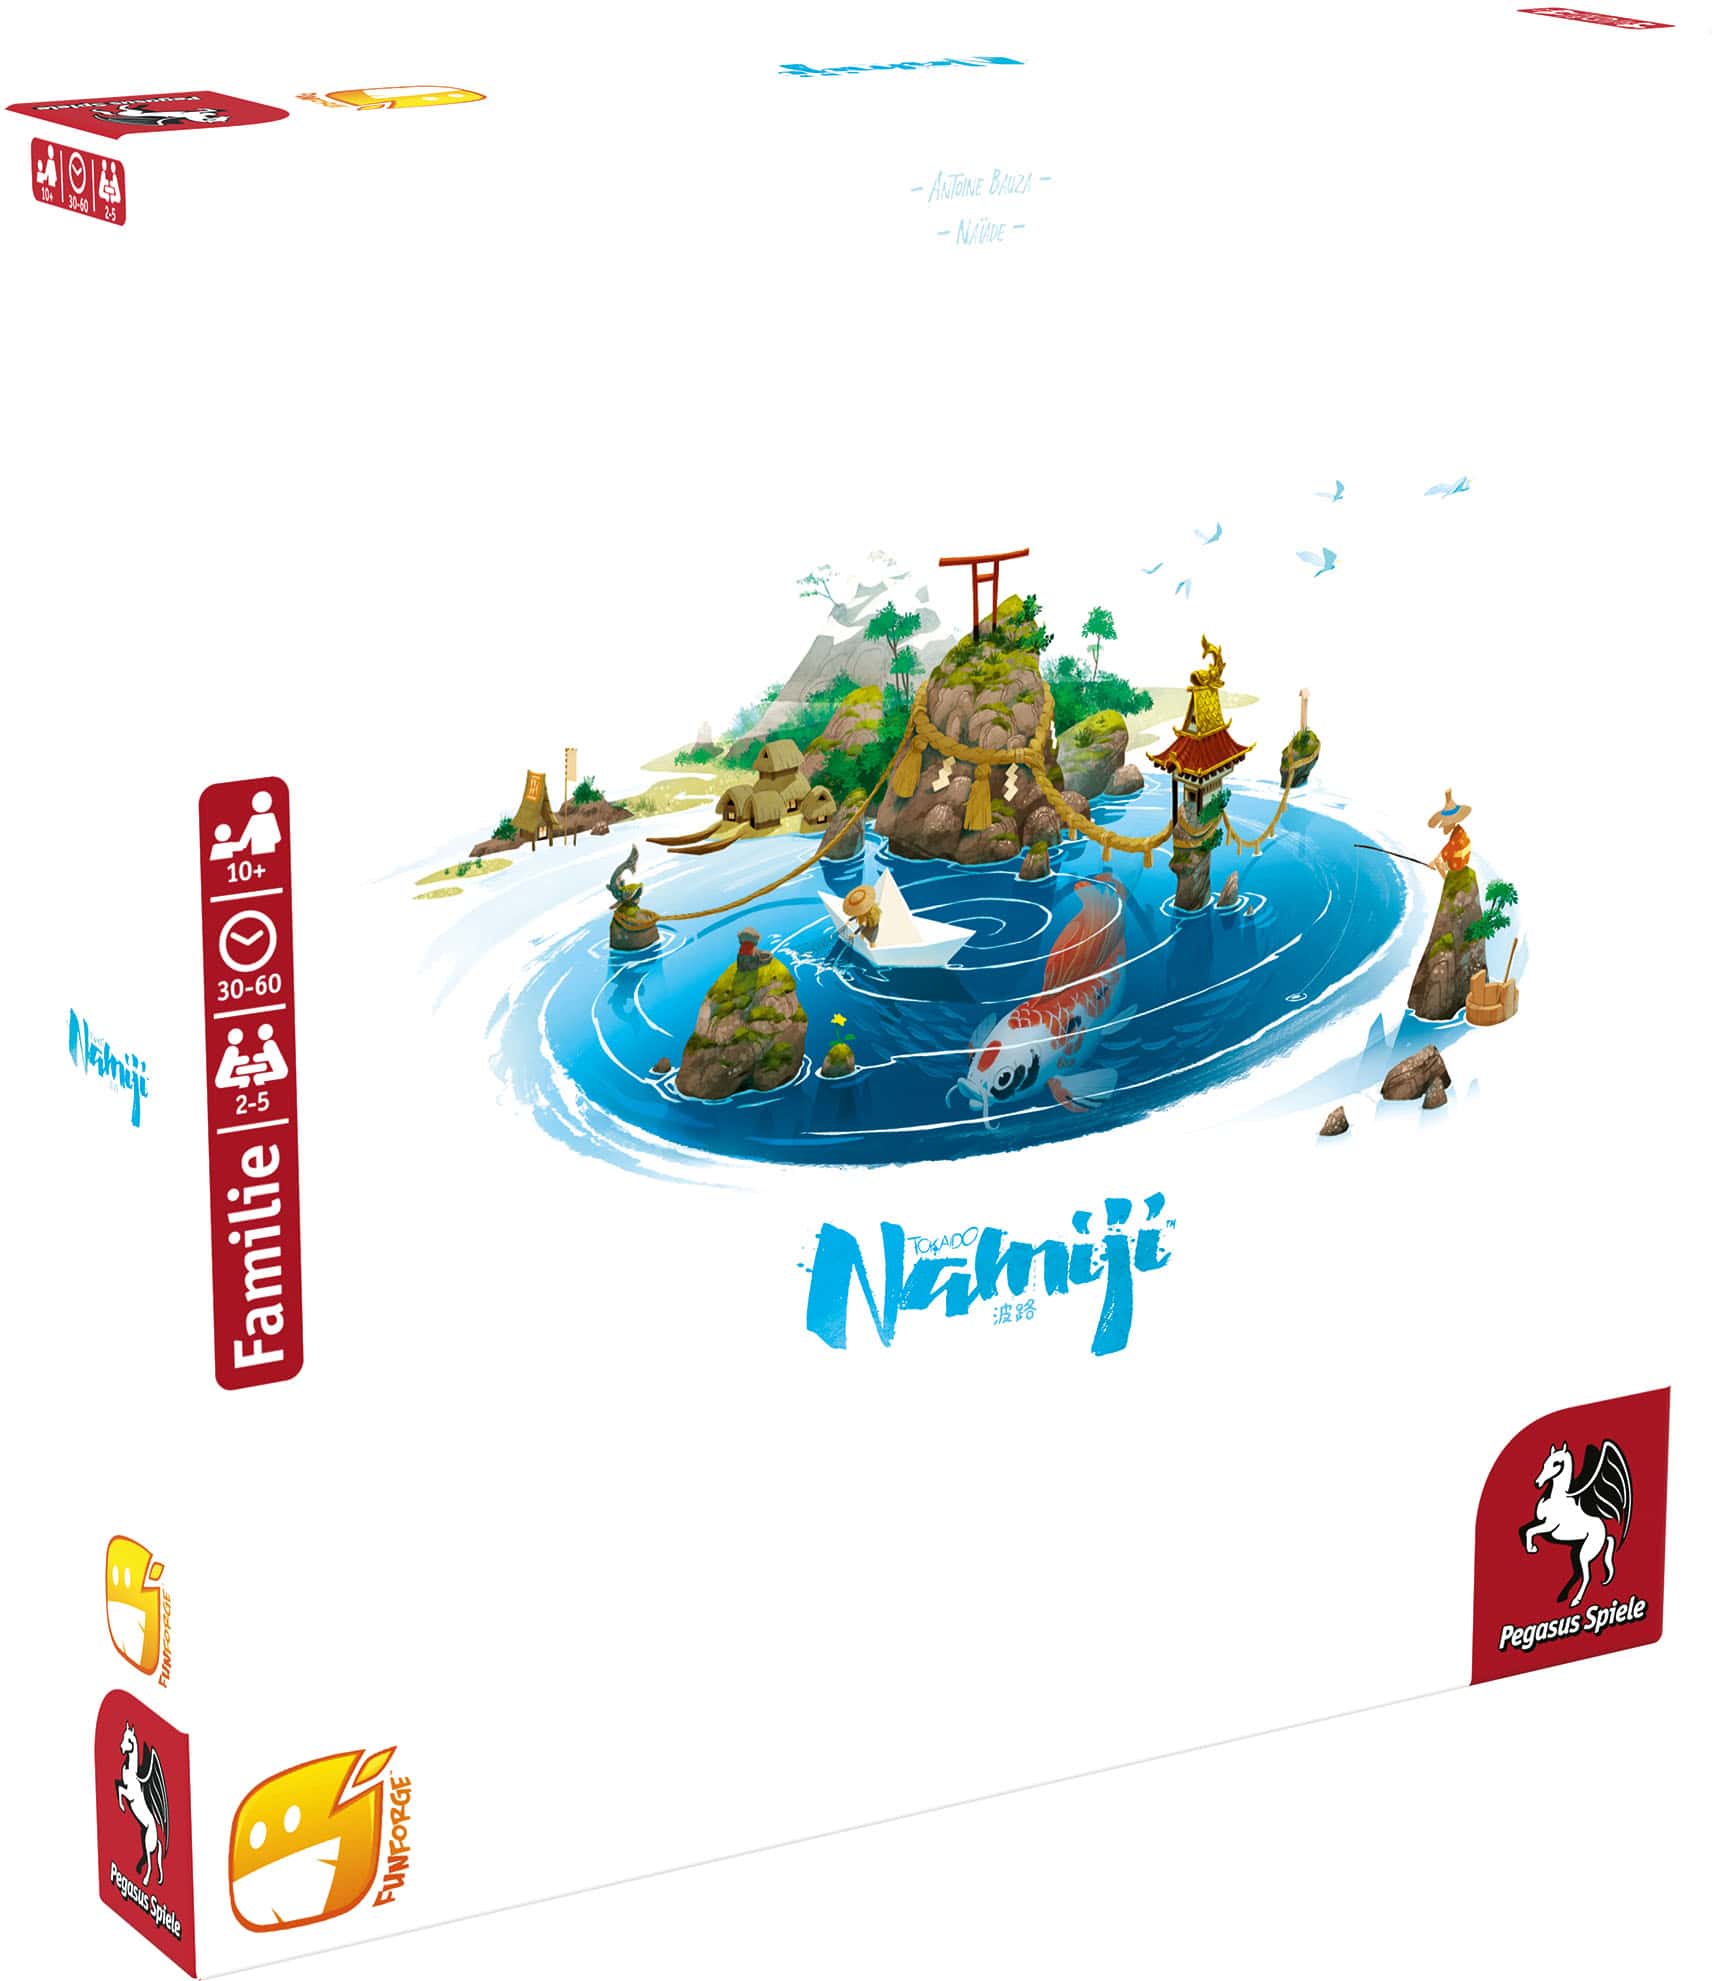 Namiji - Ein Tokaido-Spiel